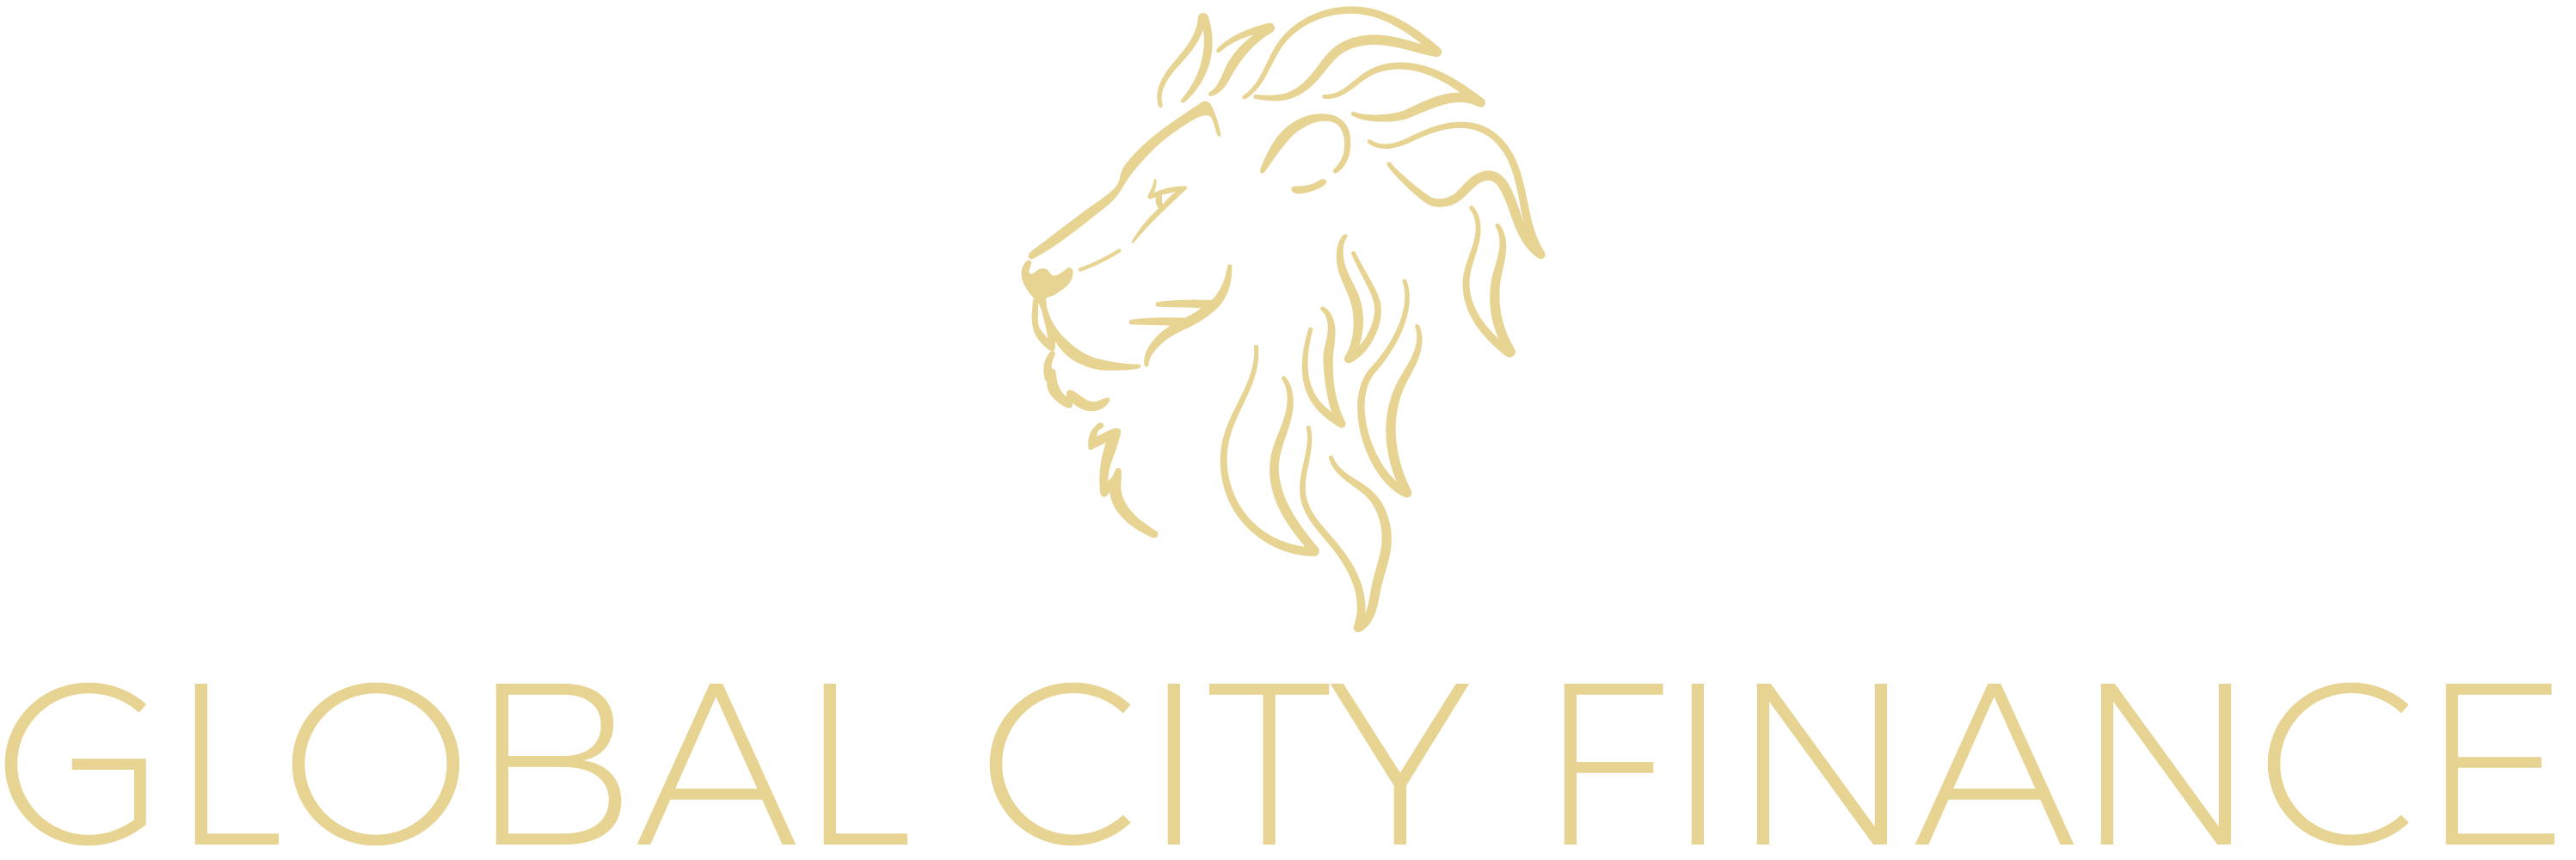 Global City Finance AG